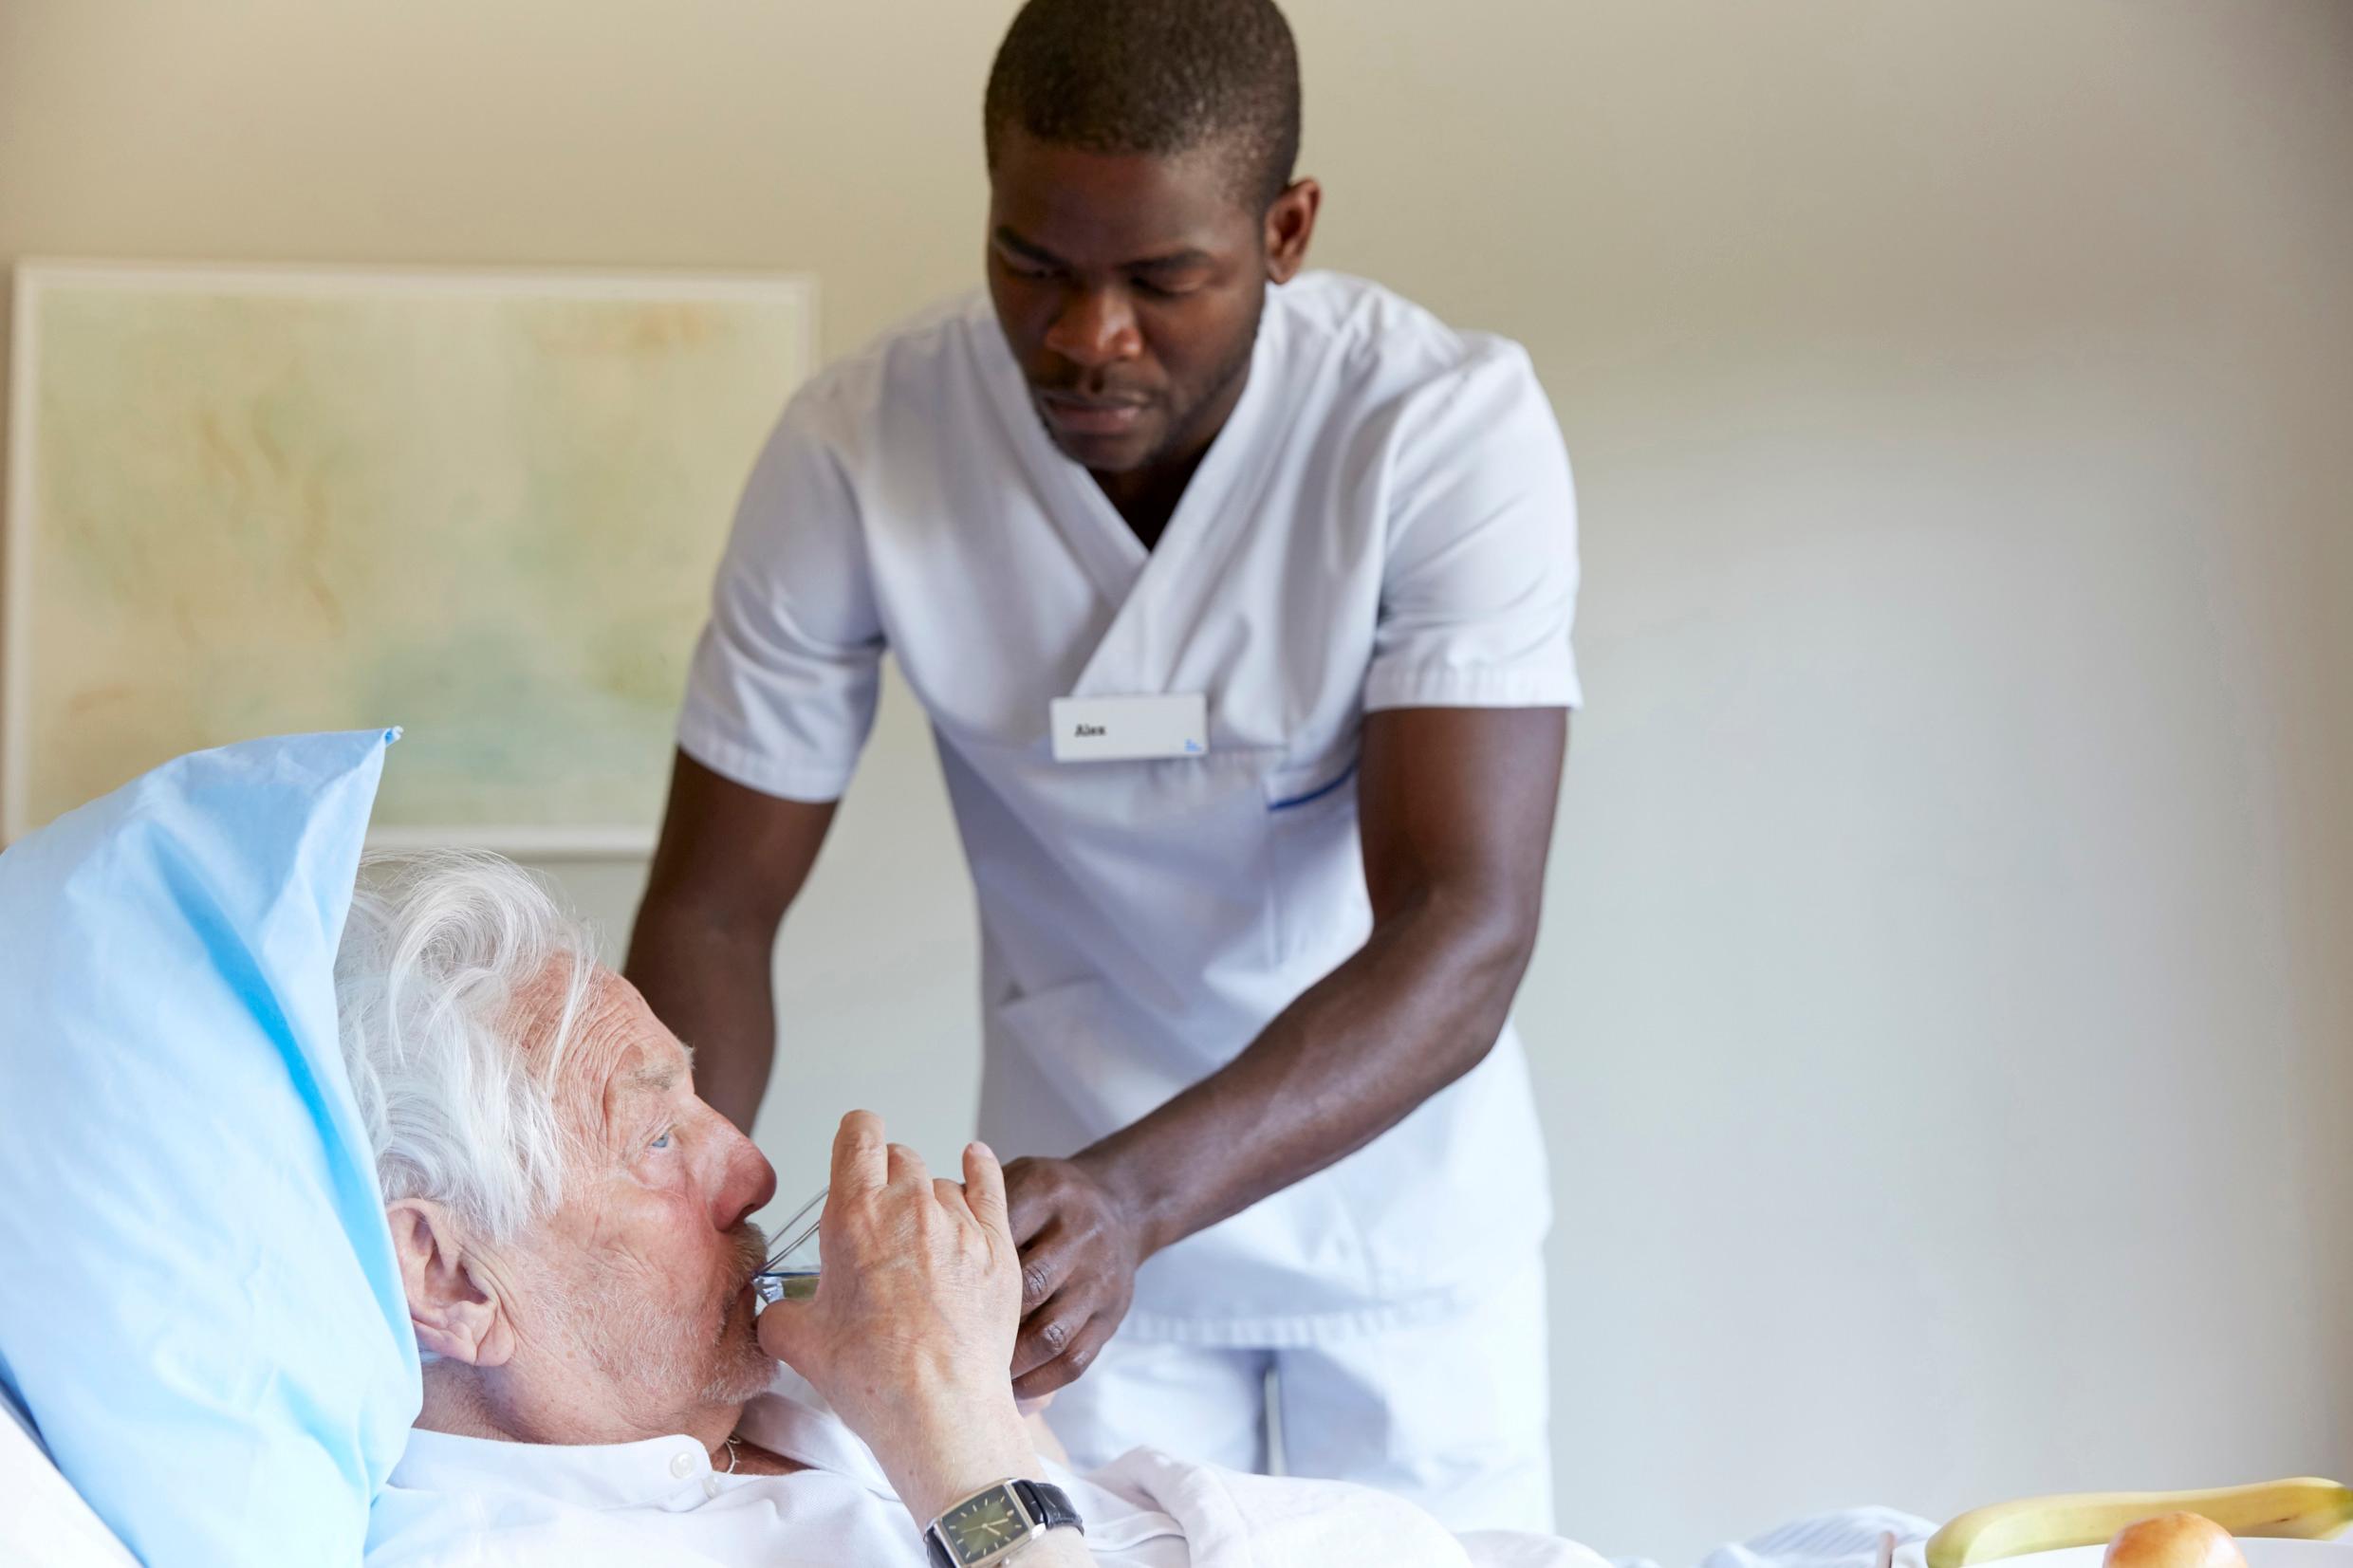 A male nurse in white scrubs tending to an elderly man half-lying in a hospital bed.